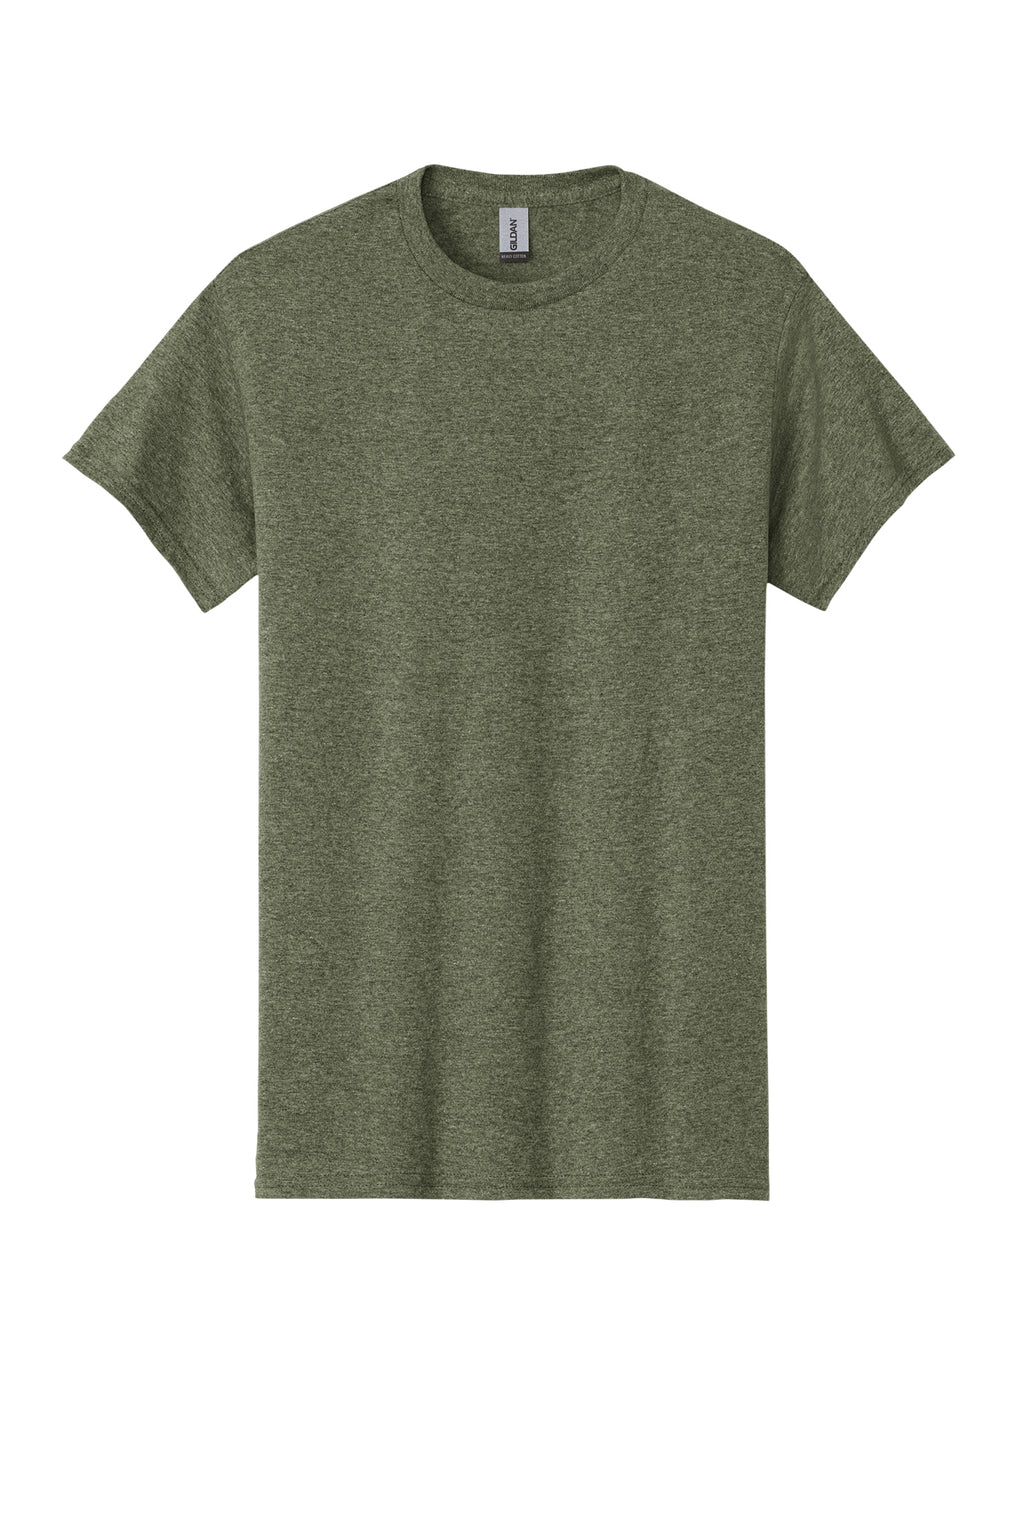 Gildan Mens/Unisex S/S Shirts Heather Military Green